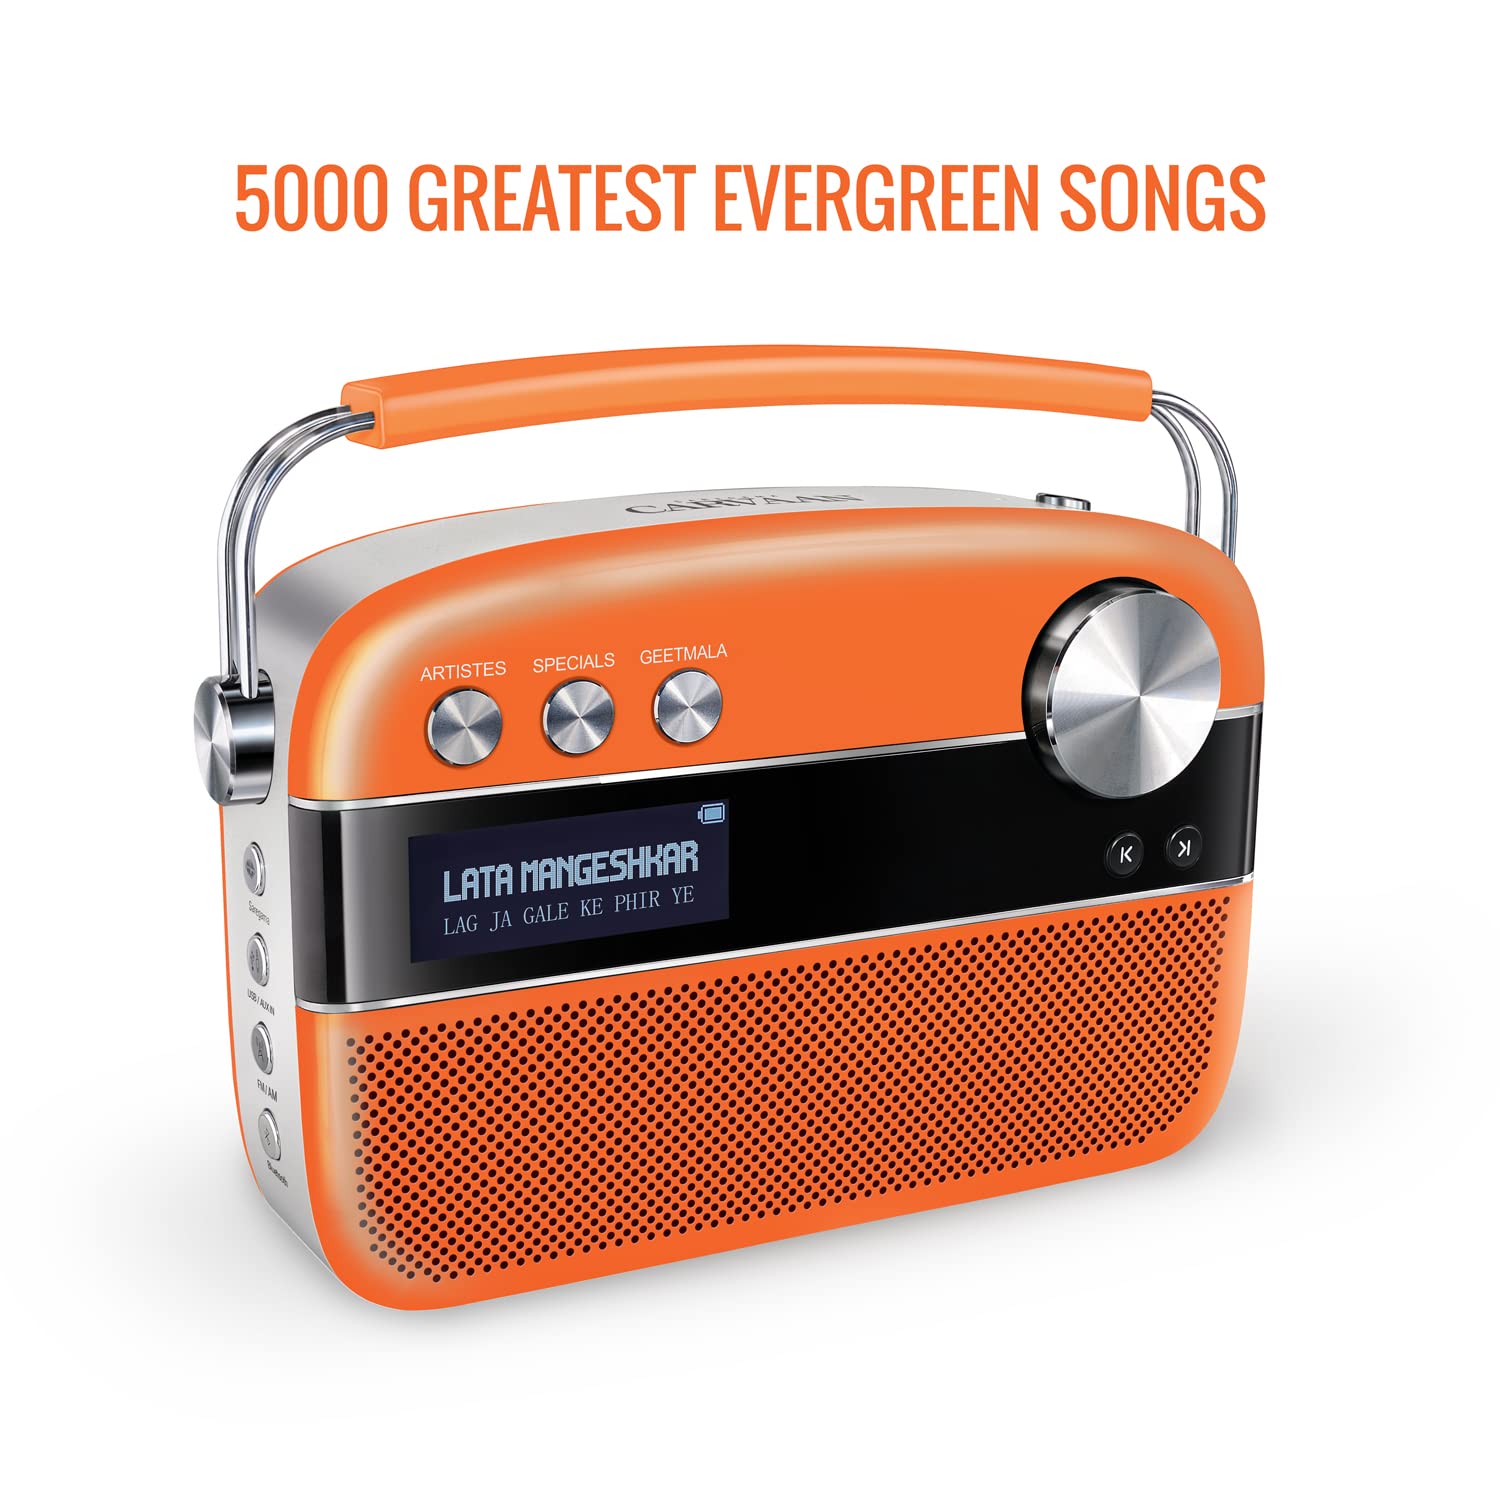 Saregama Carvaan Premium (Pop Colour Range) Hindi - Portable Music Player with 5000 Preloaded Songs, FM/BT/AUX (Candy Orange)